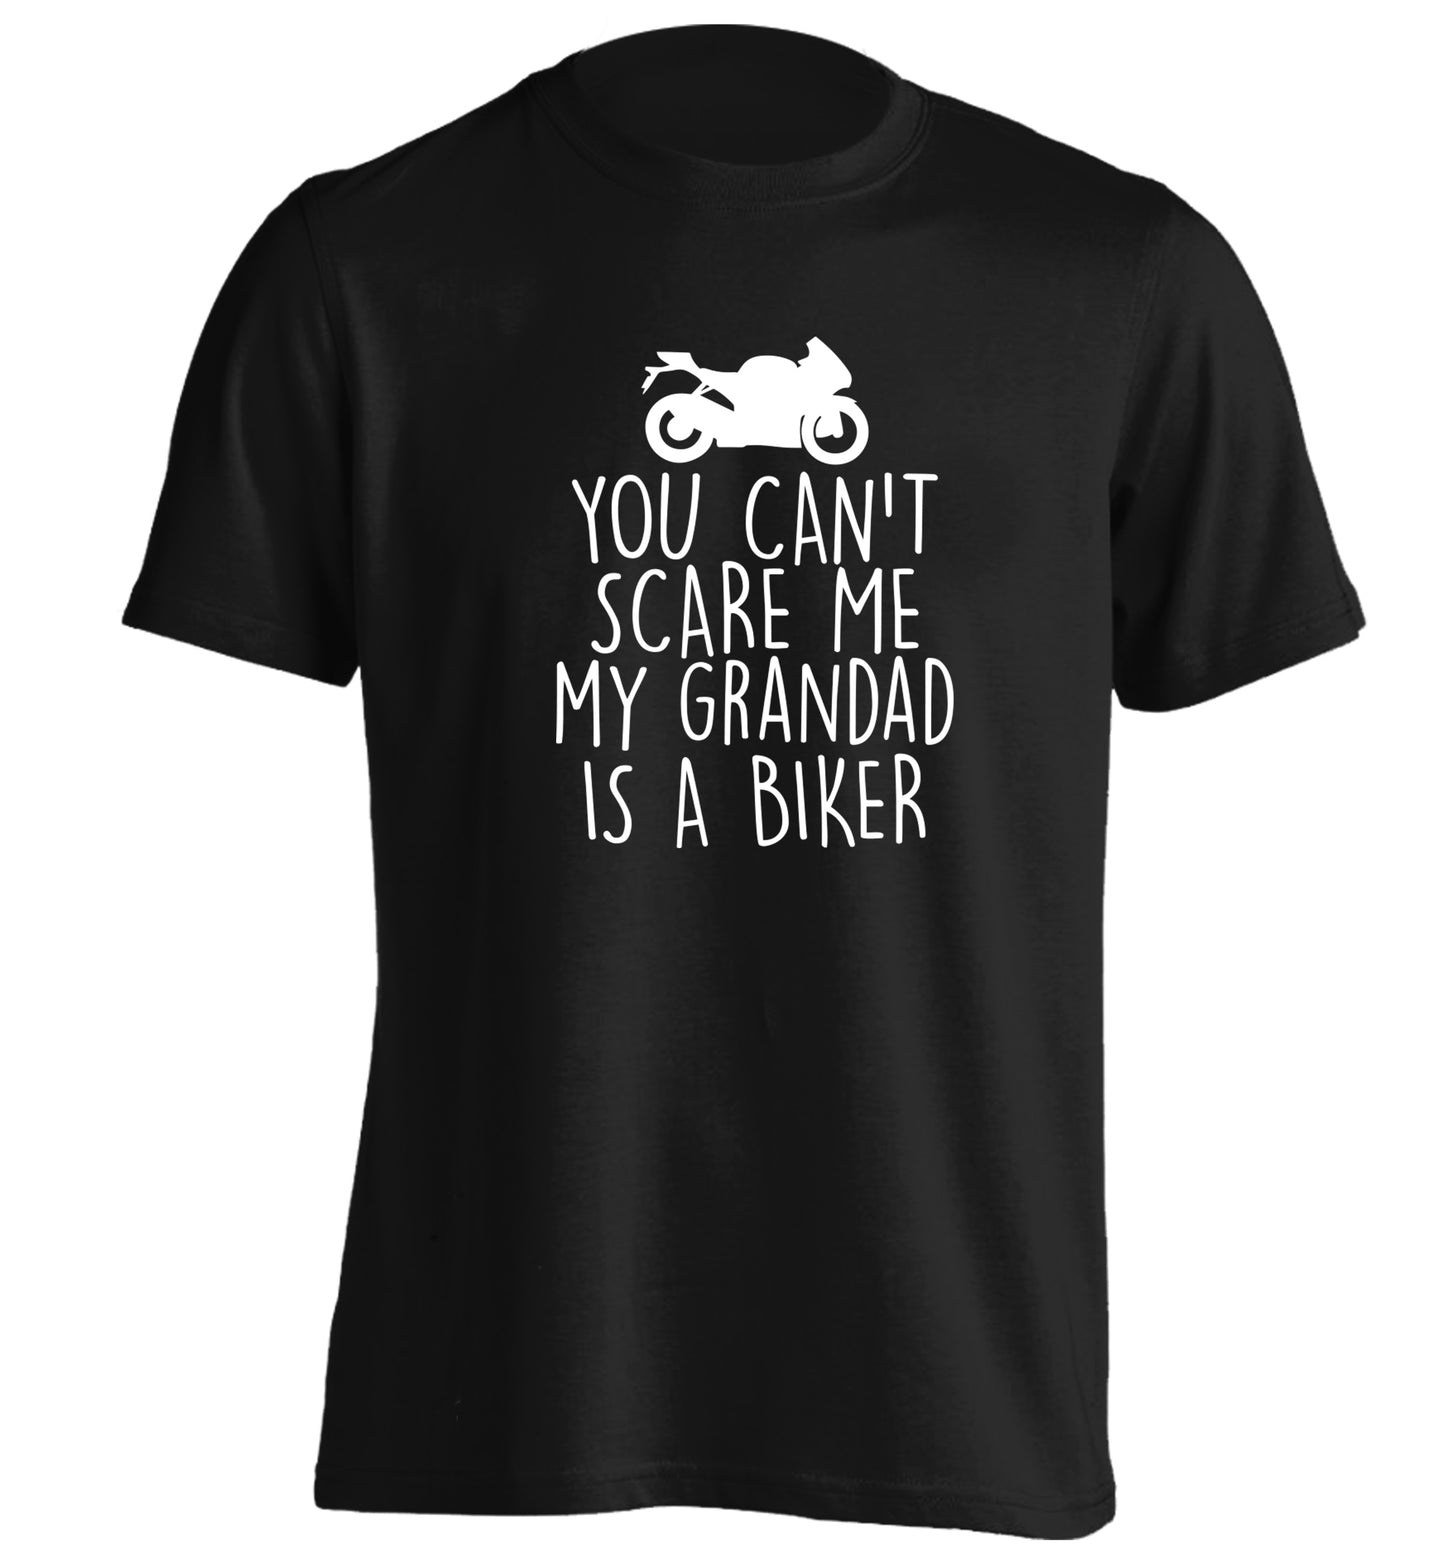 You can't scare me my grandad is a biker adults unisex black Tshirt 2XL